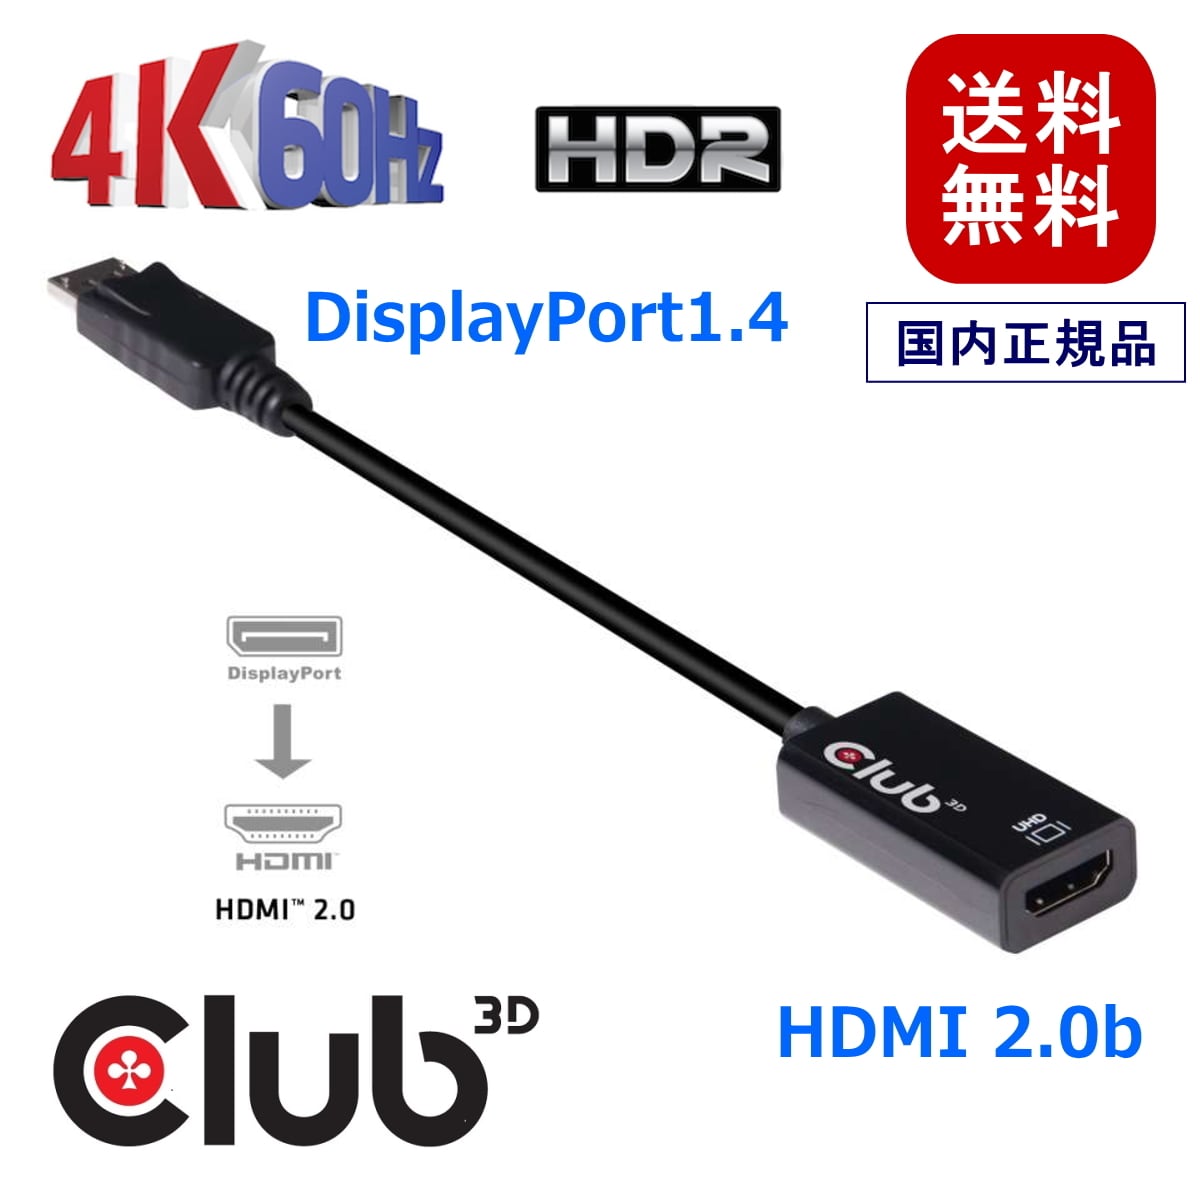 CAC-1080】Club3D DisplayPort 1.4 to HDMI 2.0b HDR（ハイダイナミックレンジ）対応 4K 60Hz  Active Adapter 変換アダプタ BearHouse